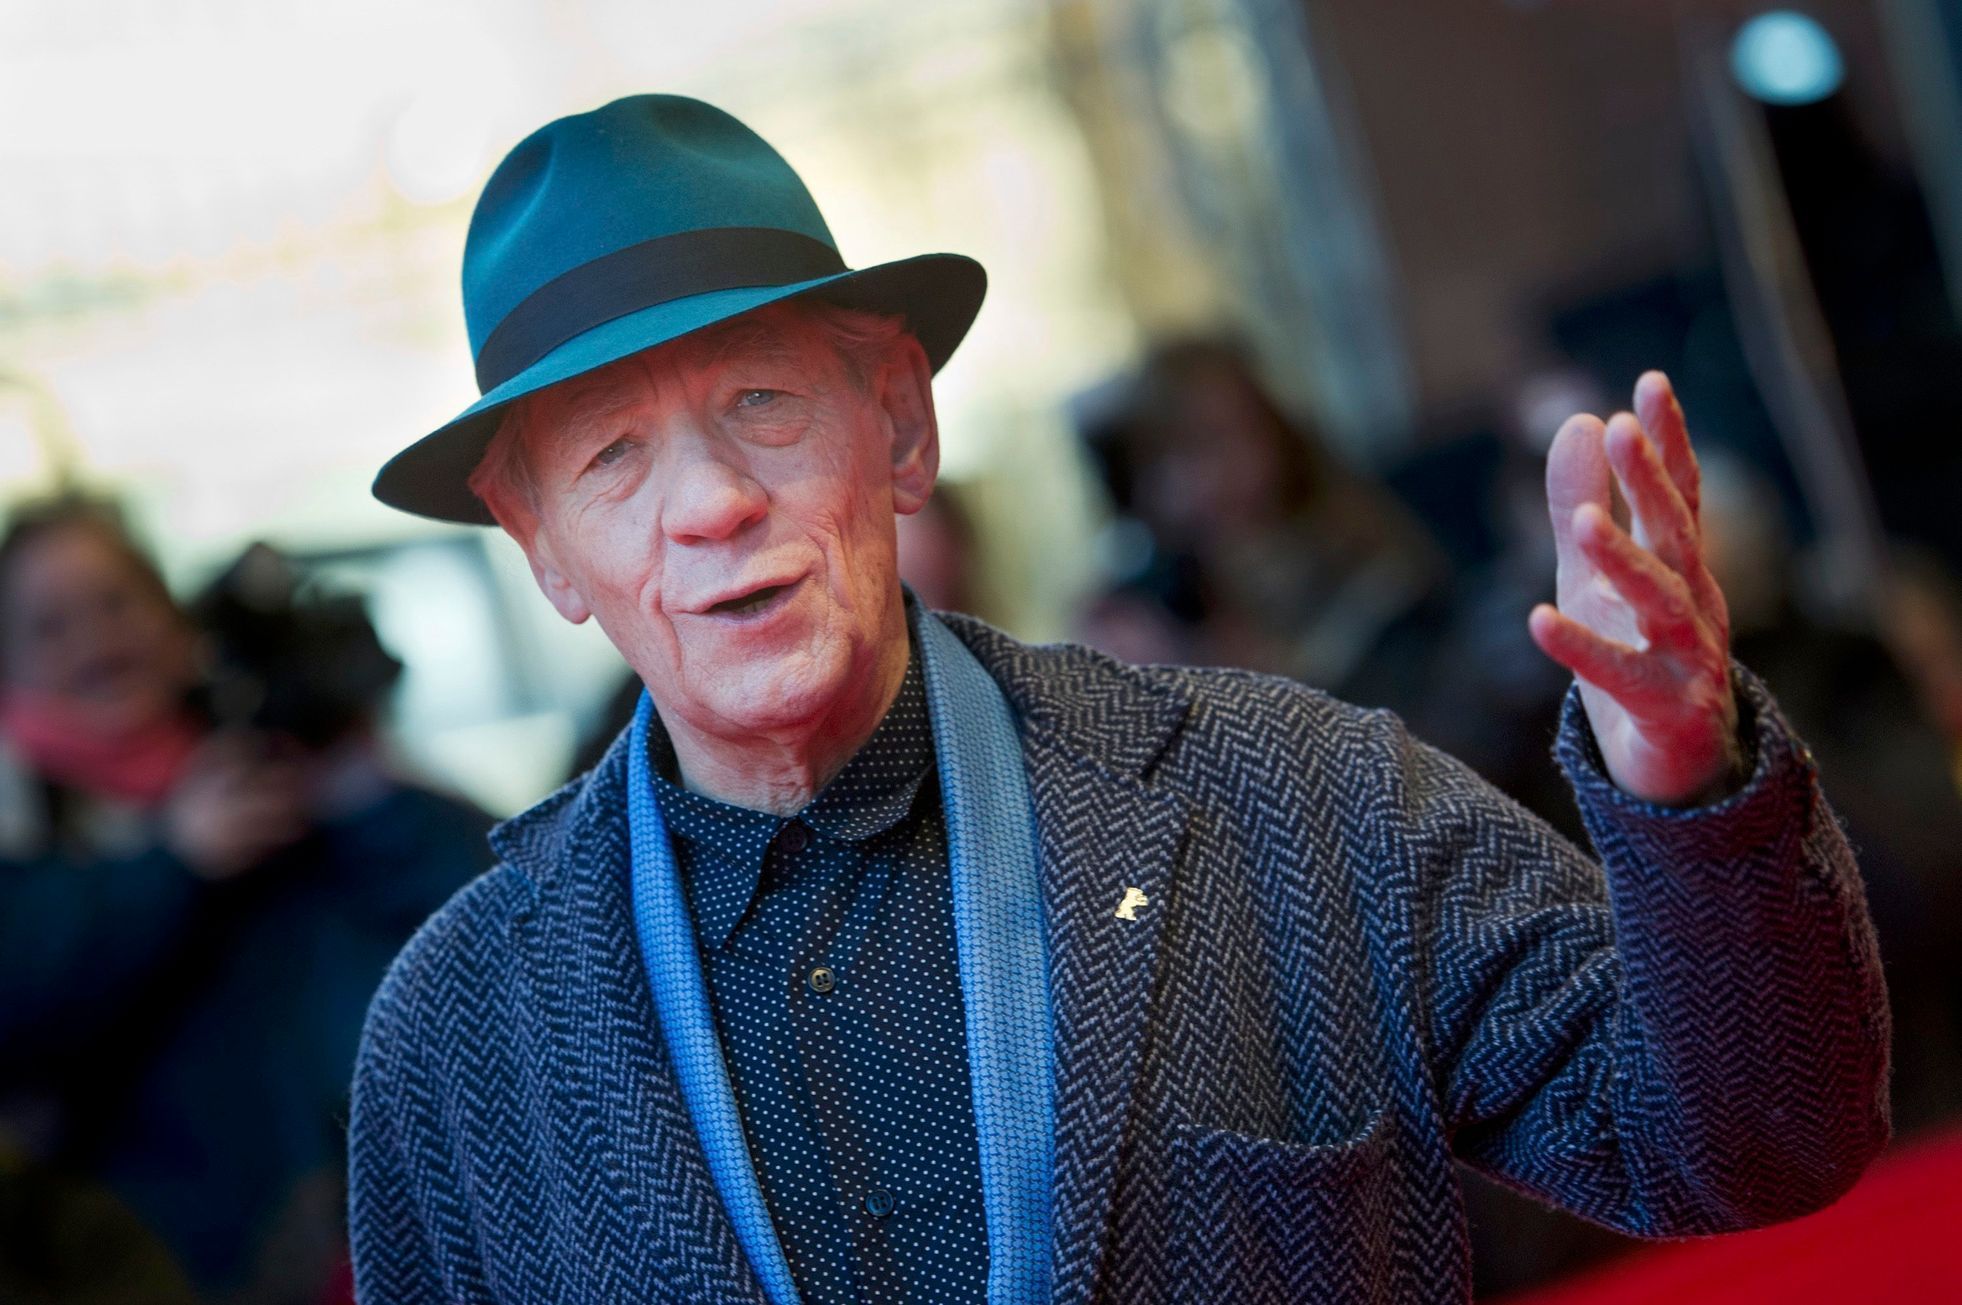 Actor McKellen arrives for screening at 65th Berlinale International Film Festival in Berlin